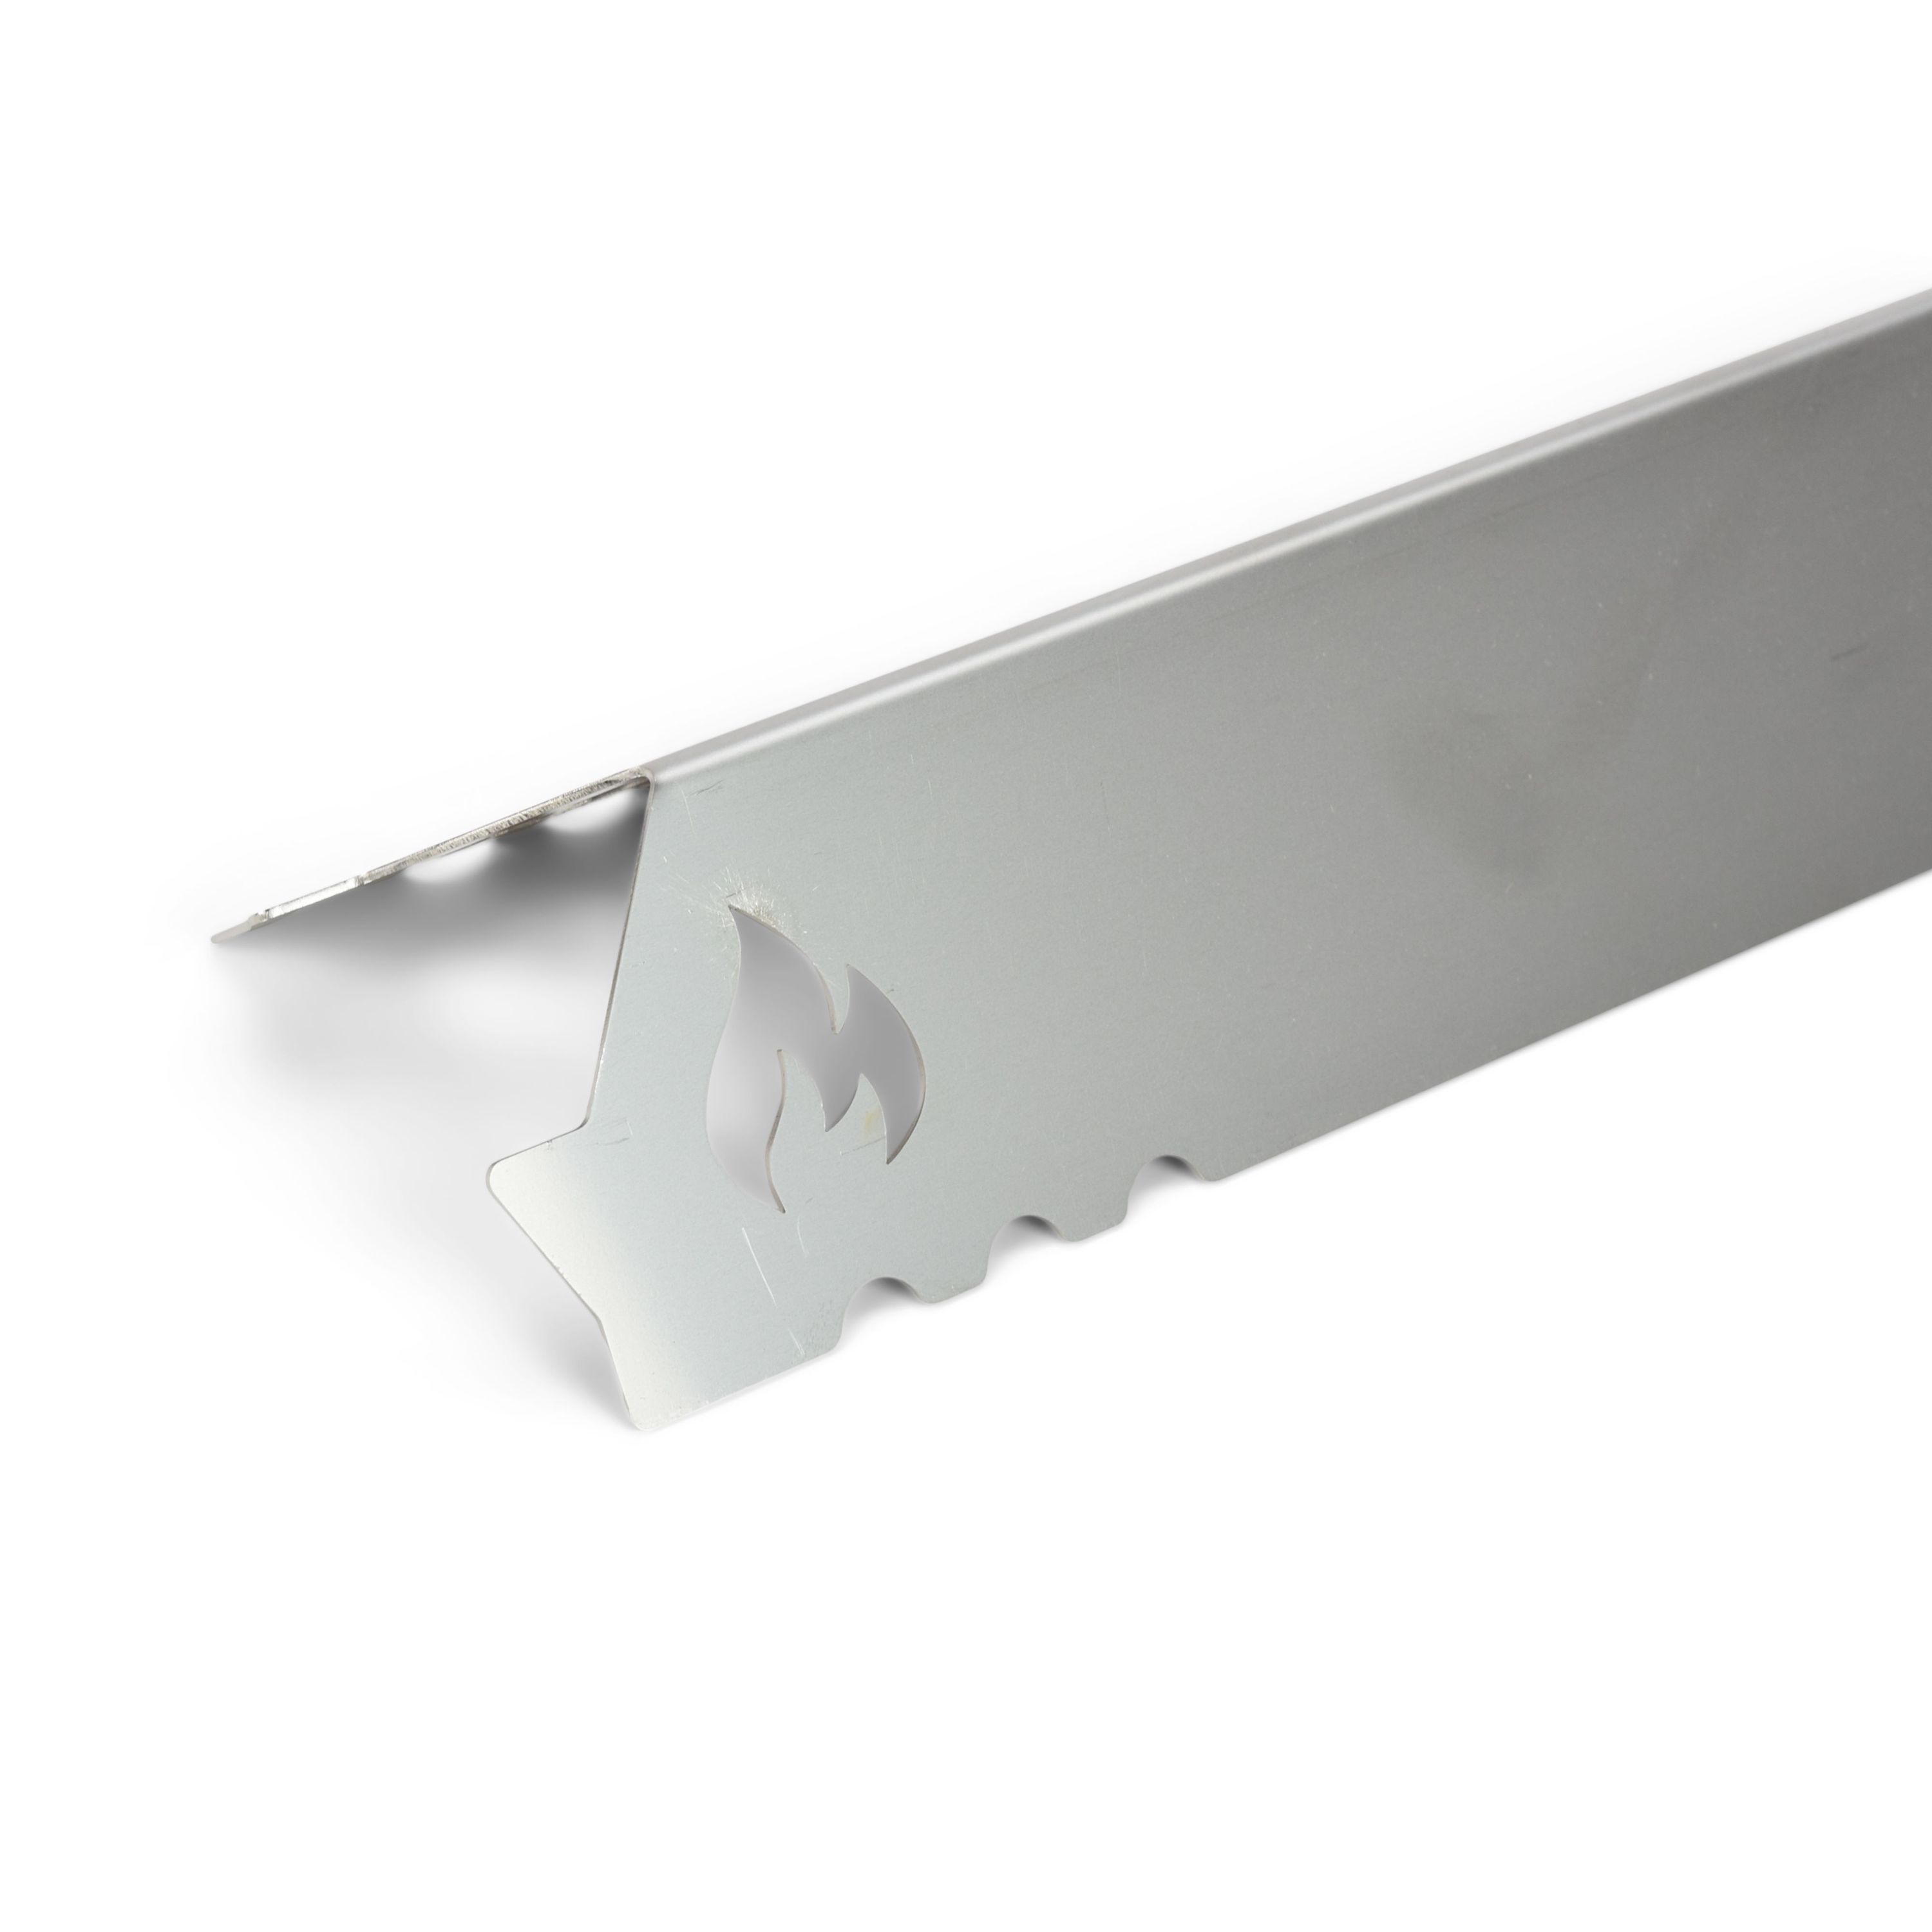 Stainless steel aroma rail for Rösle Burner cover for Videro G4-SL and G4-SK